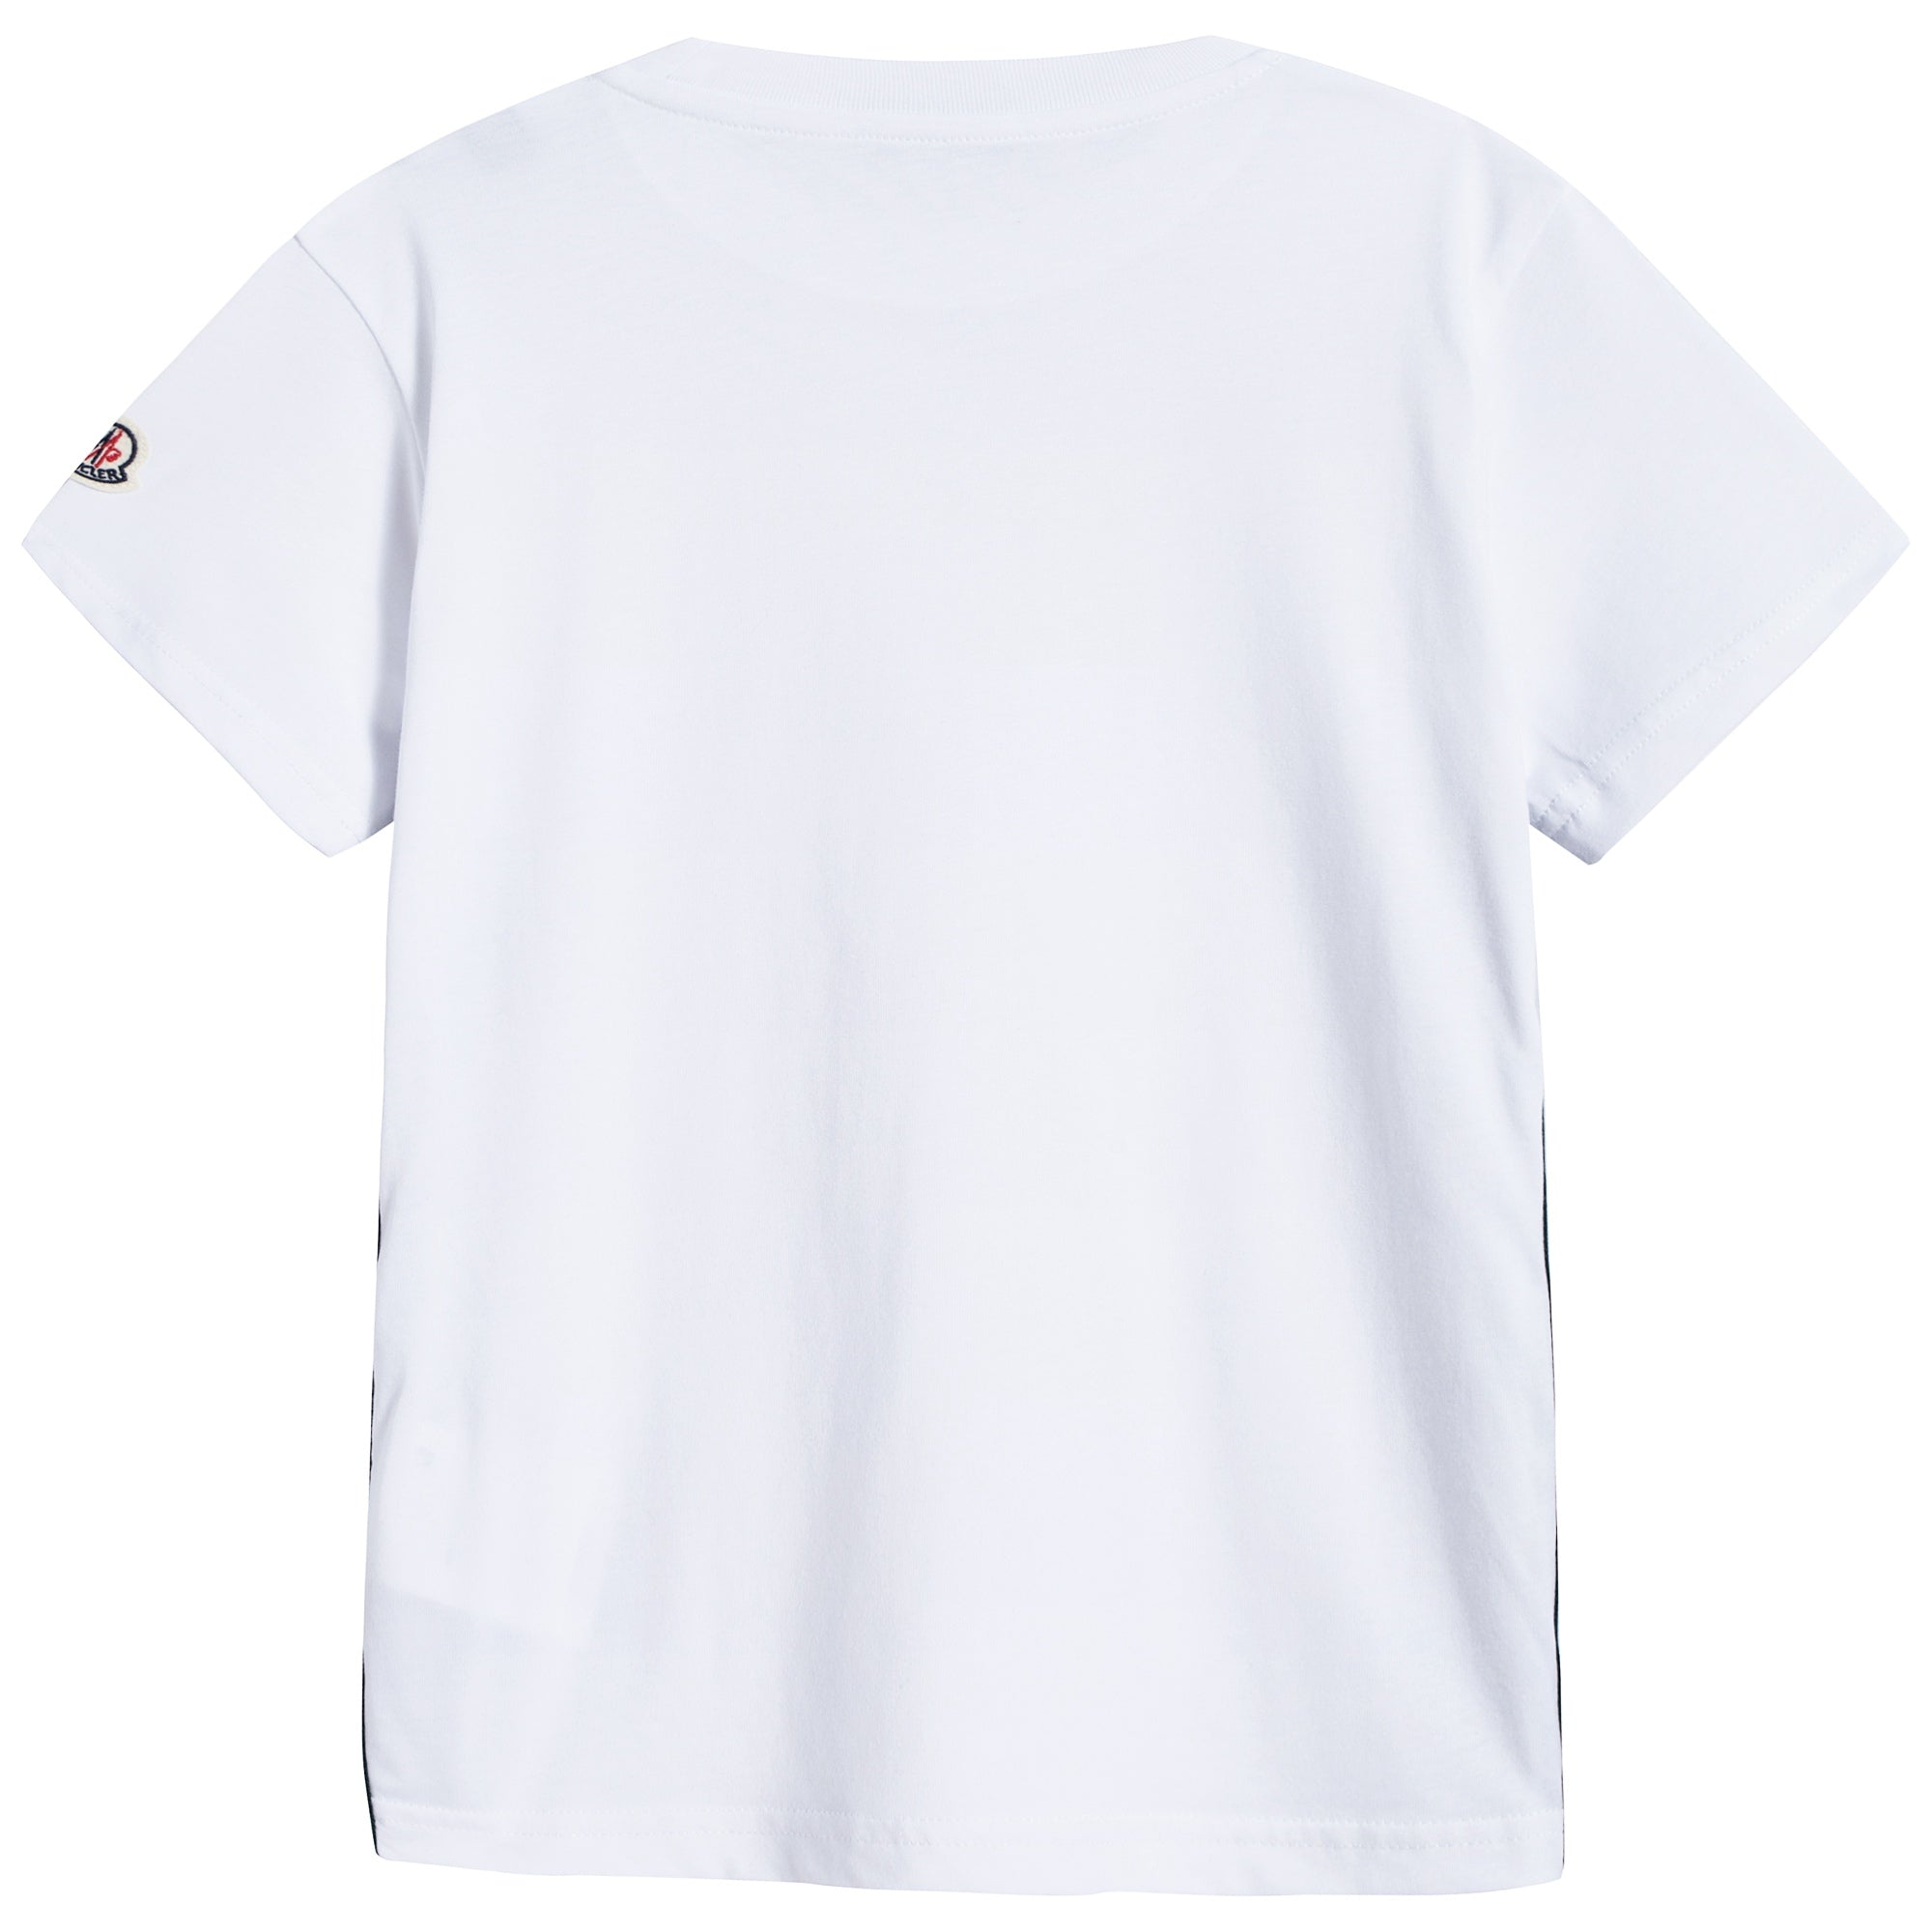 Boys White Cotton T-shirt